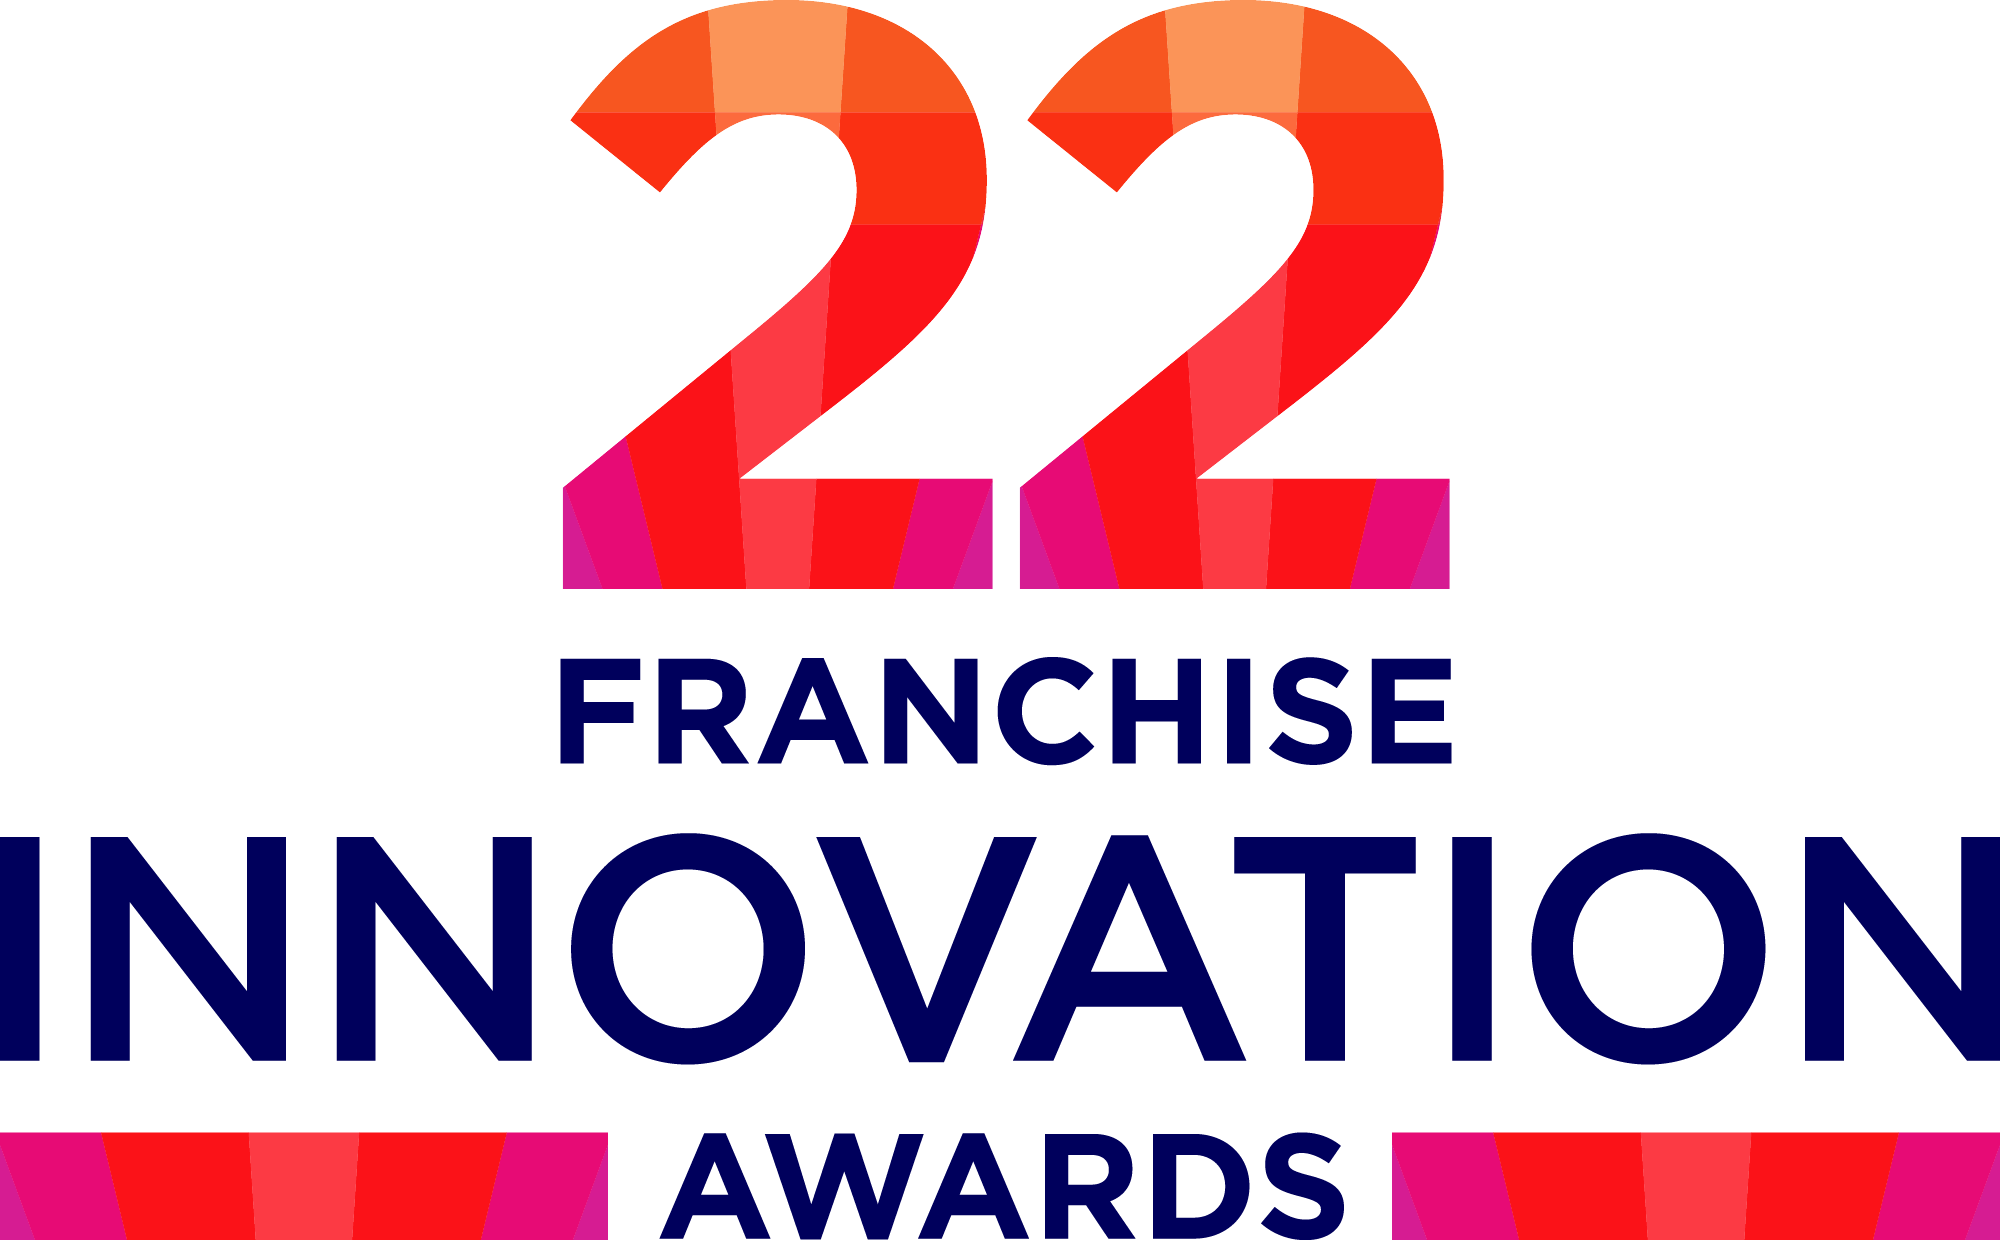 Franchise Innovation Awards 2022